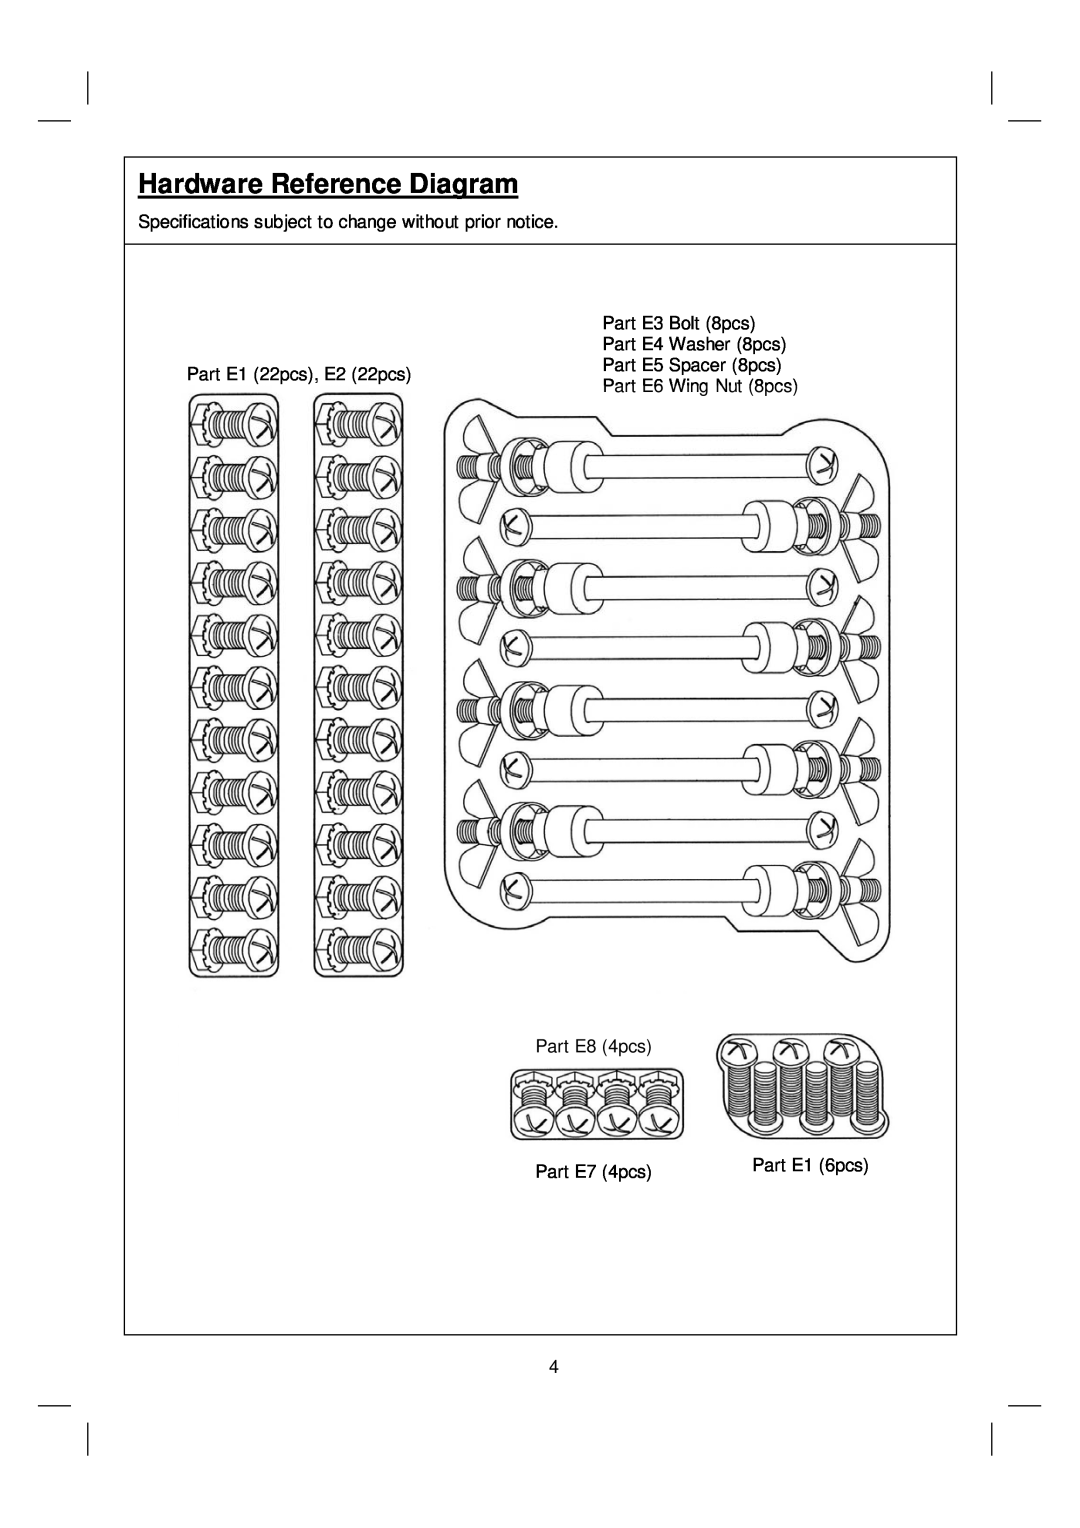 Royal Leisure 359 warranty Hardware Reference Diagram, Part E3 Bolt 8pcs Part E4 Washer 8pcs, Part E8 4pcs, Part E7 4pcs 